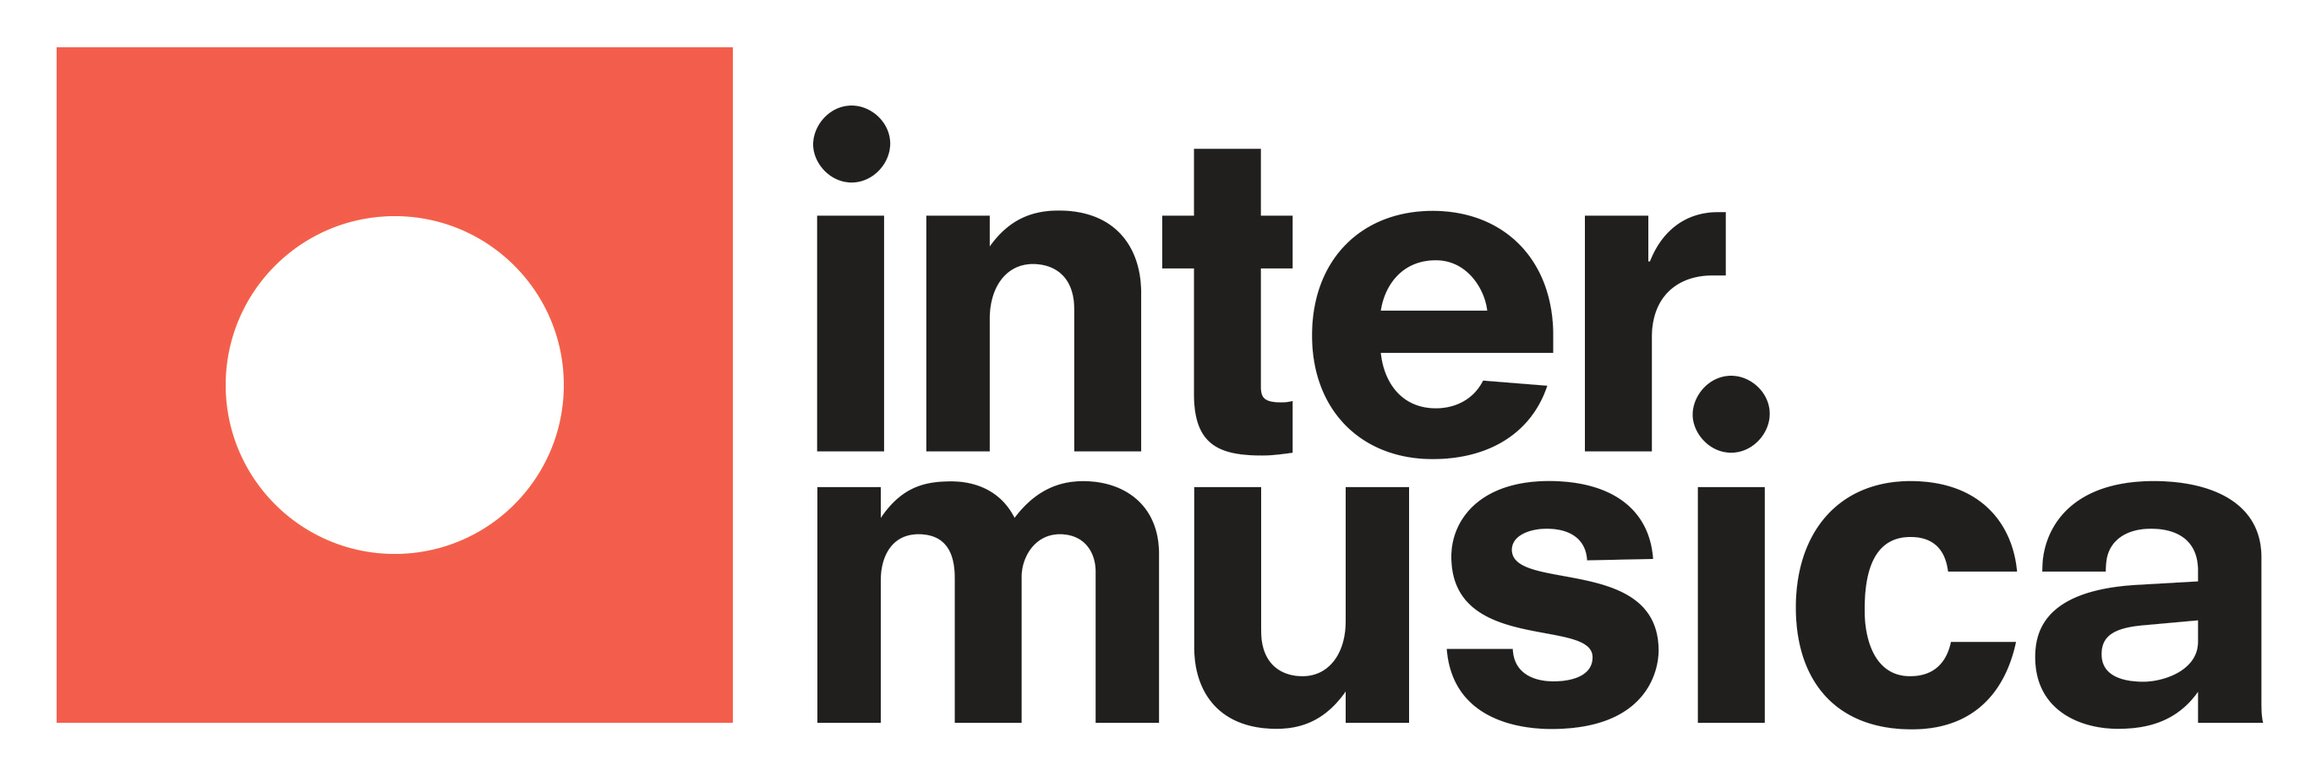 intermusica_Logo_TFS_cyber security company london -small-business 